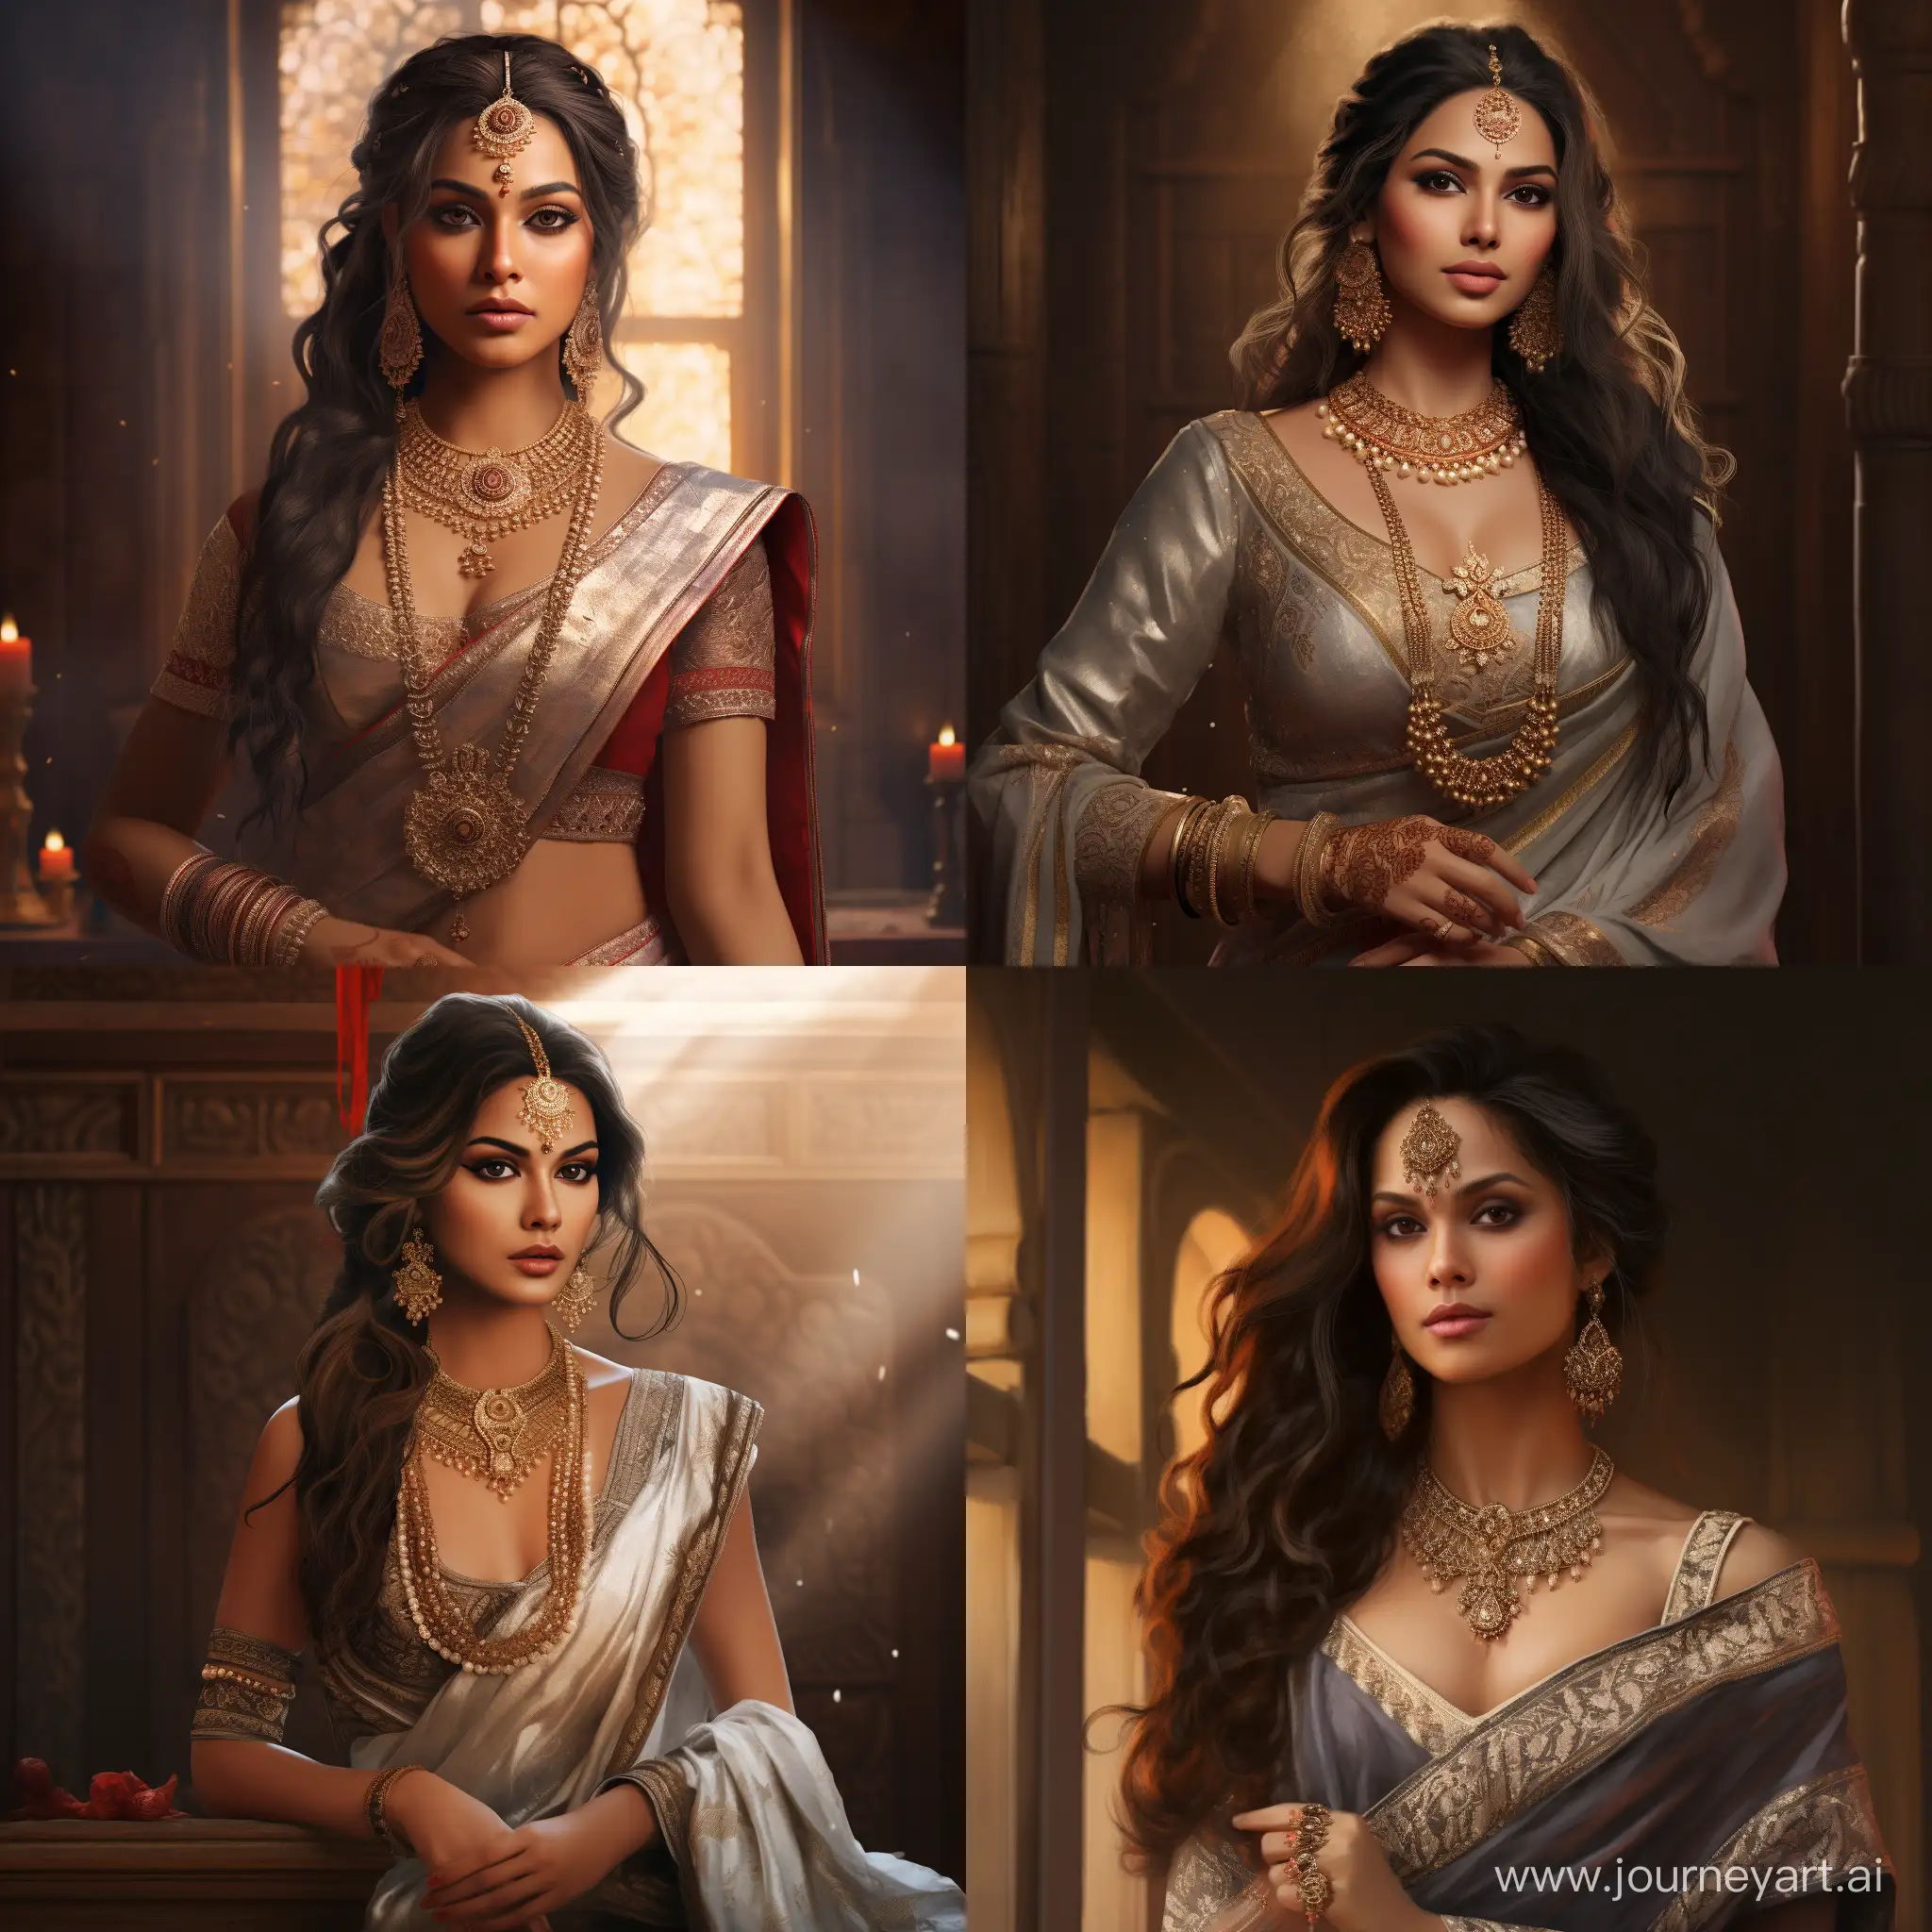 Elegant-Indian-Goddess-Realistic-Full-View-Digital-Illustration